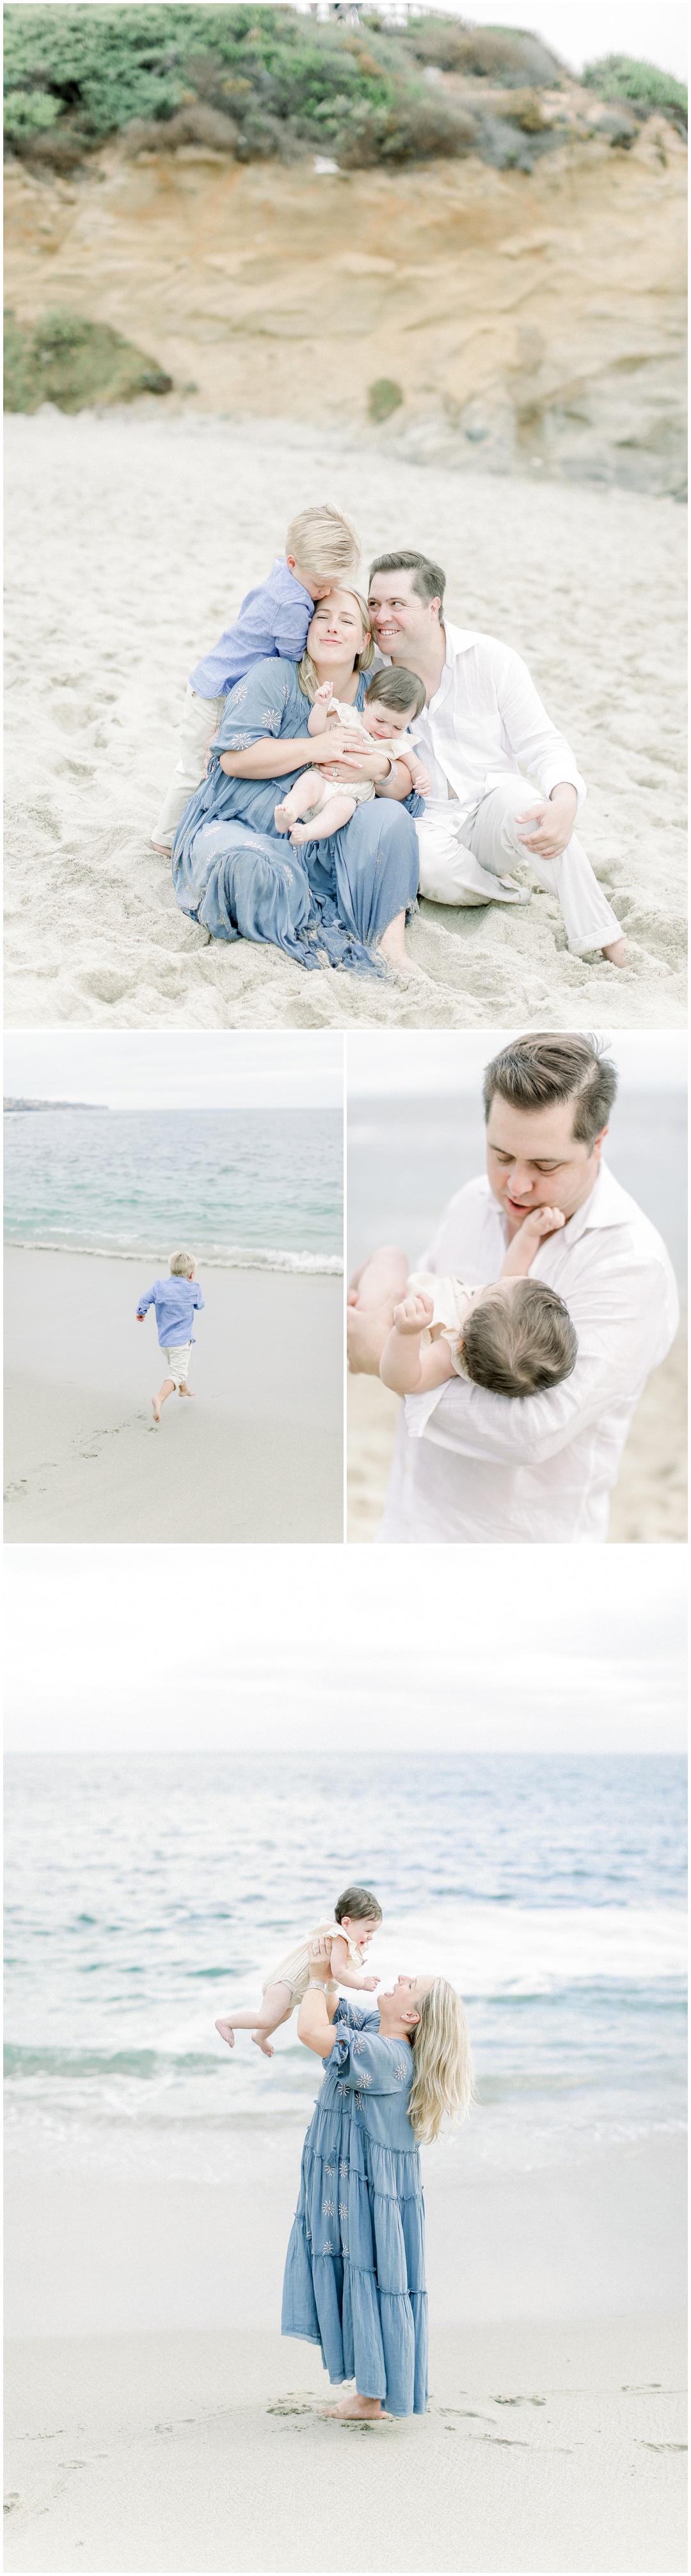 Newport+Beach+Newborn+Photographer+Orange+County+Family+Photographer+Cori+Kleckner+Photography+The+McClure+Family+Gracie+McClure_4388.jpg